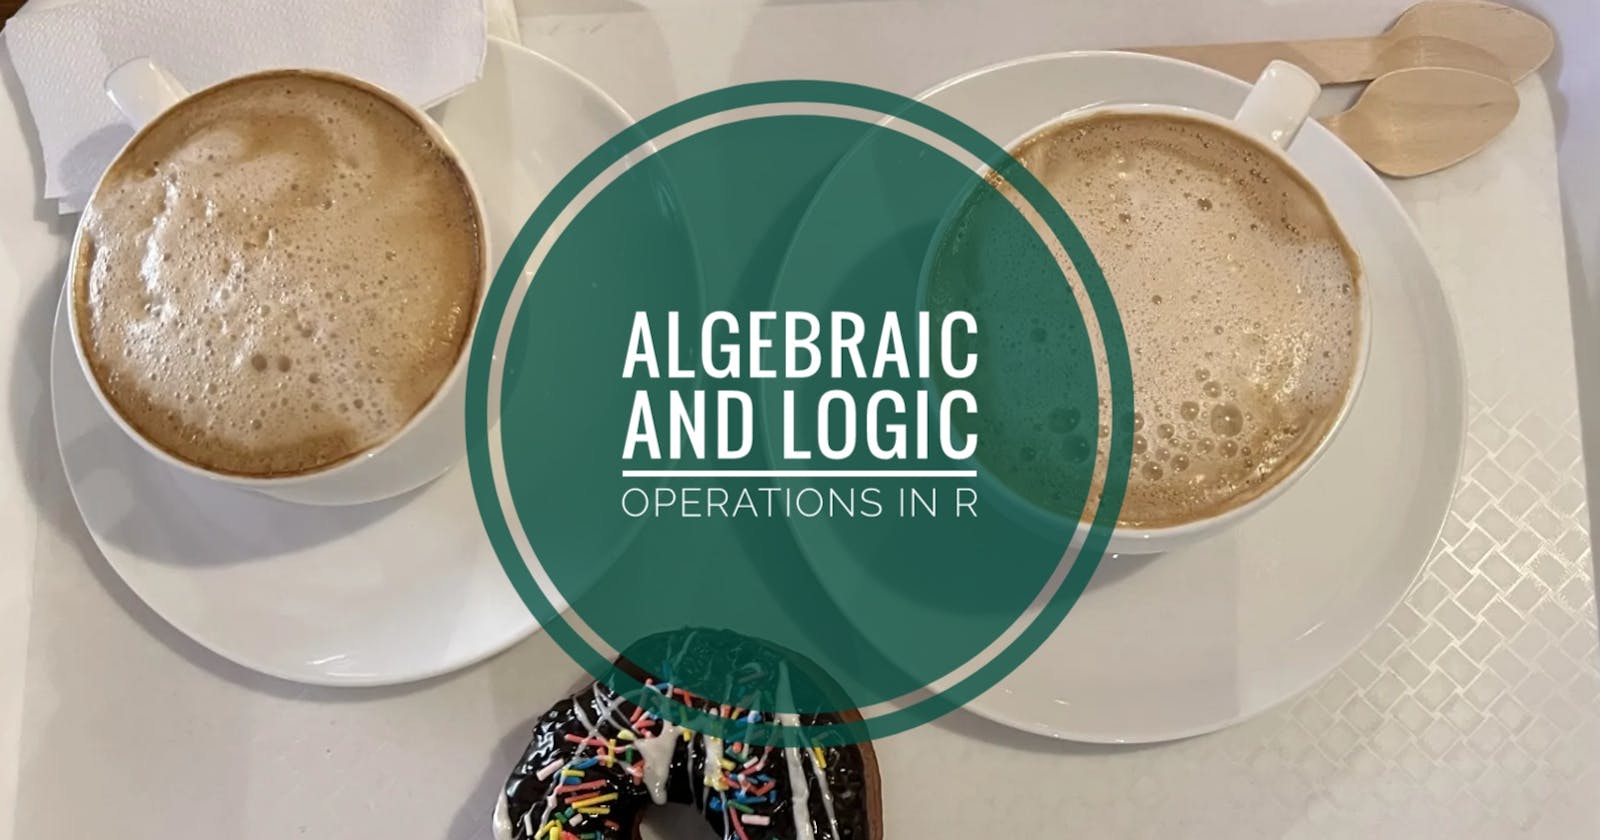 Algebraic and logic operations in R